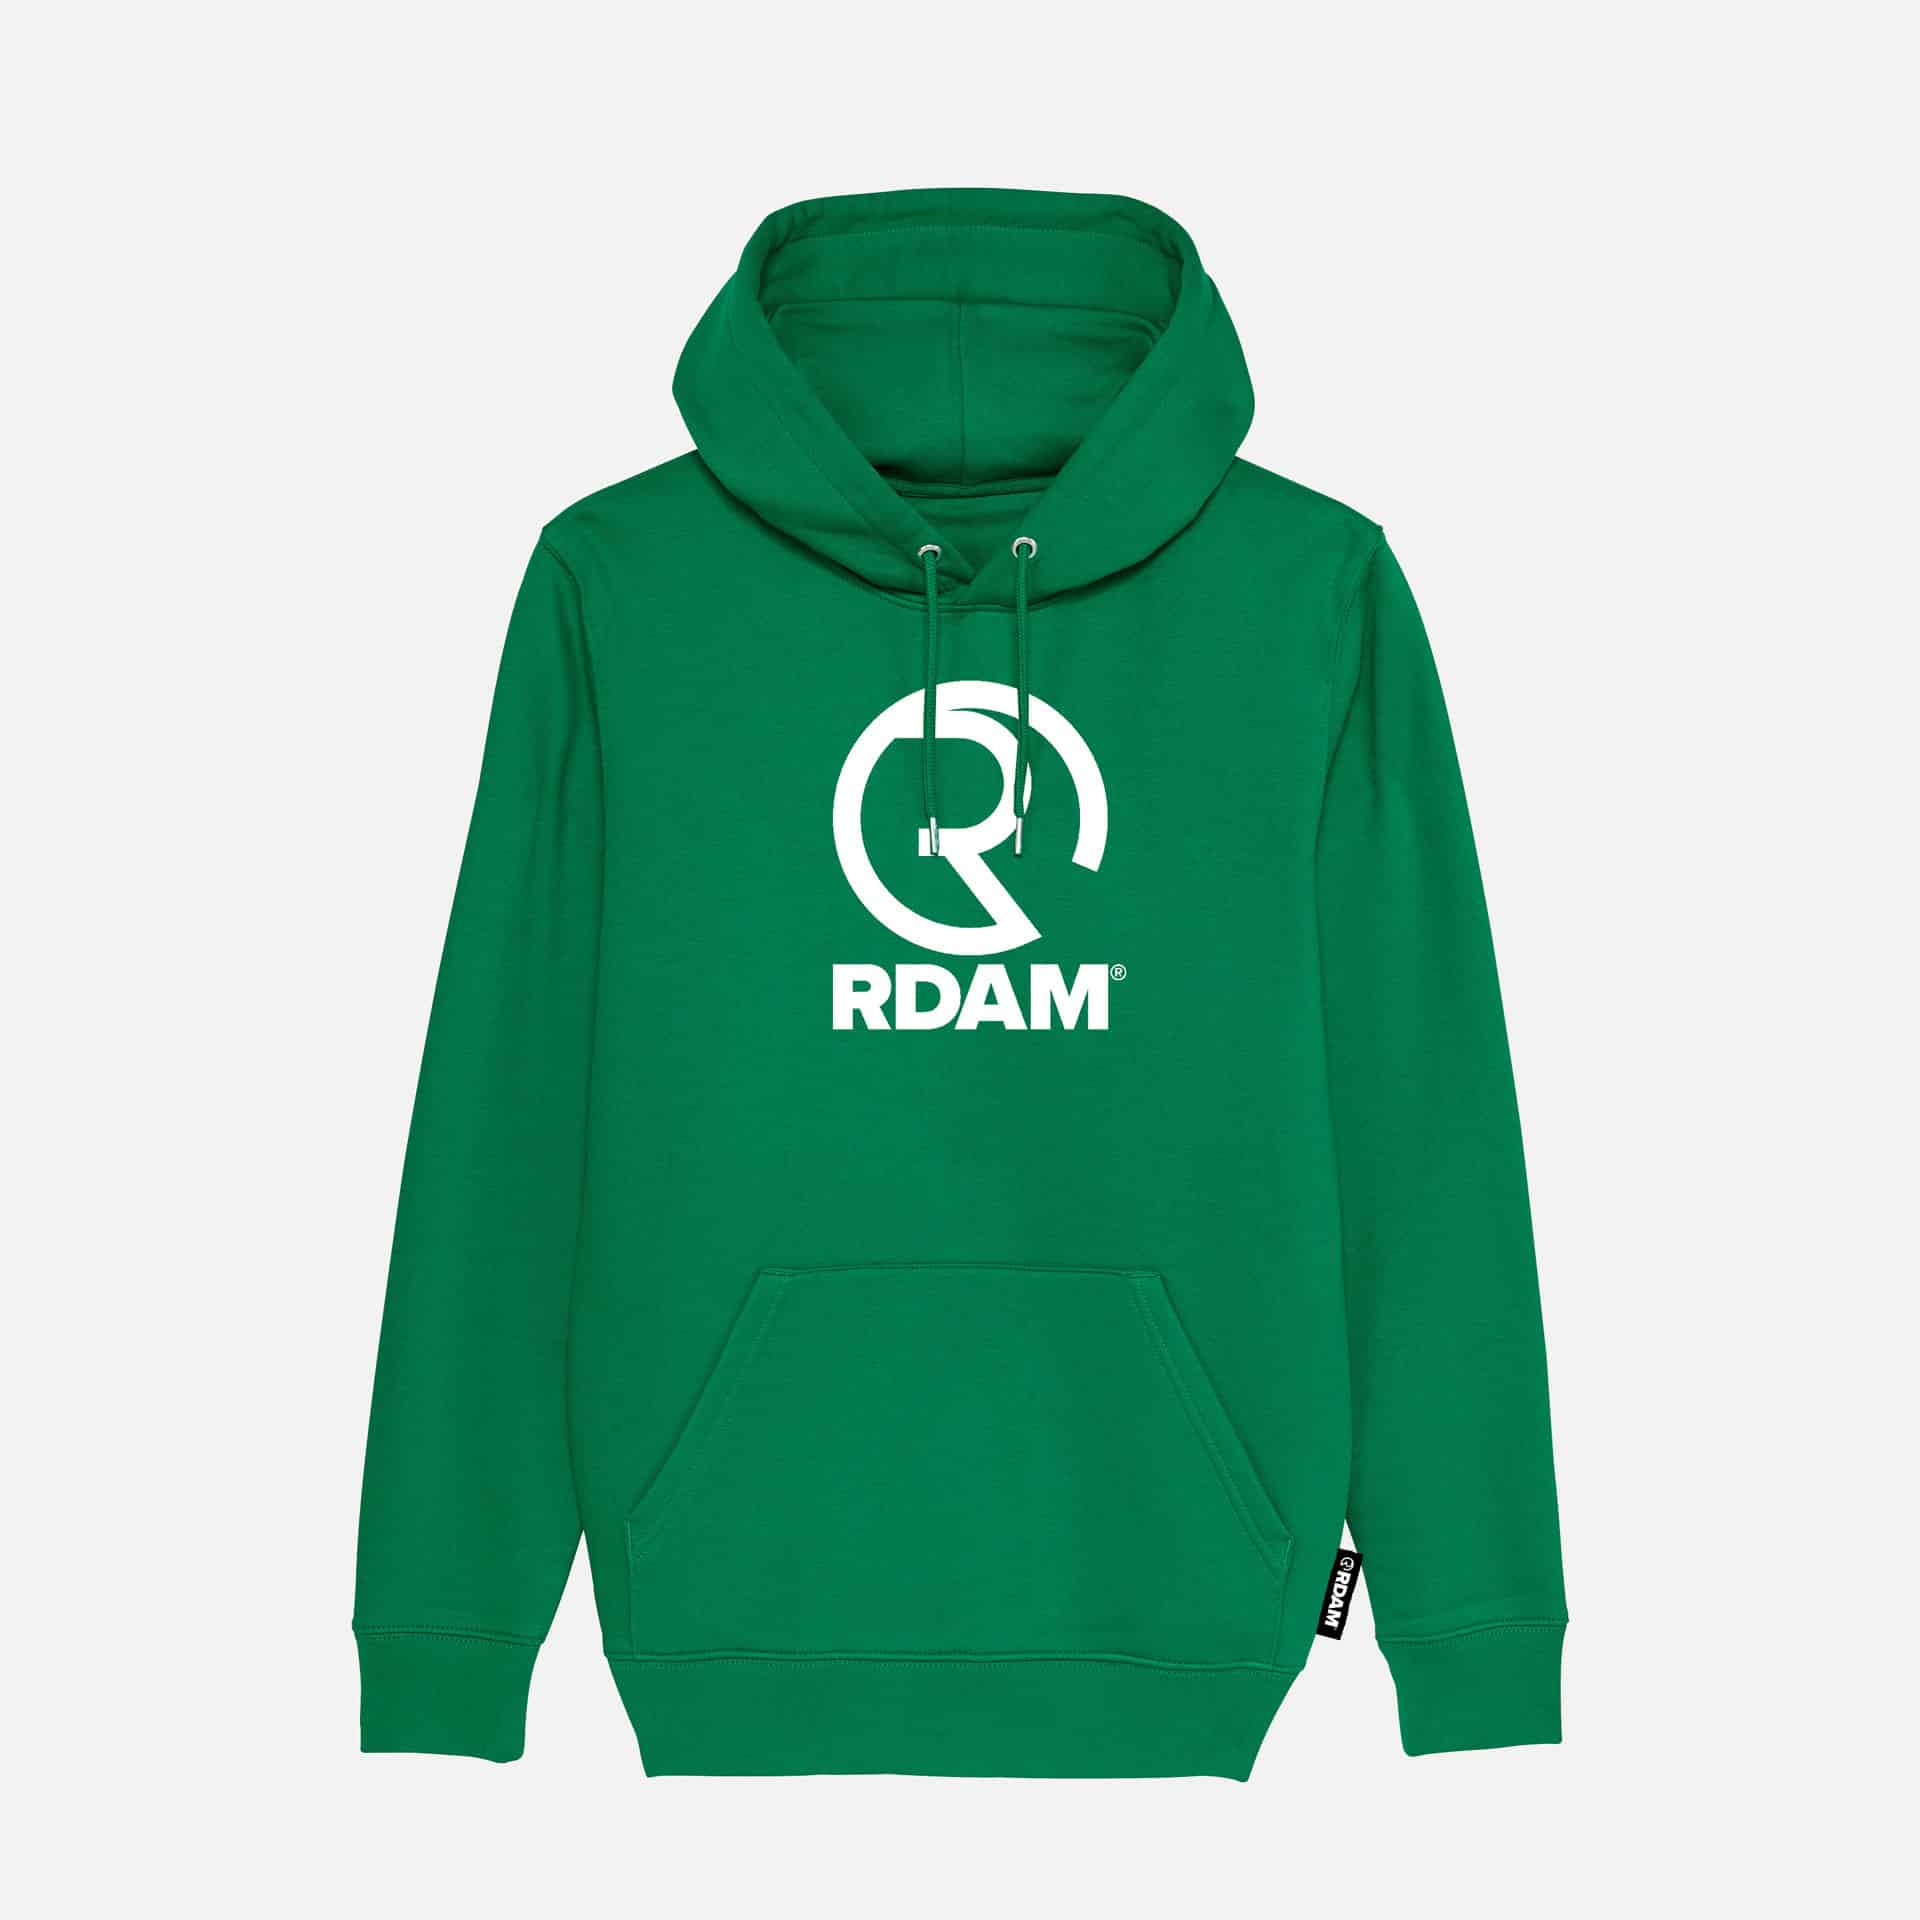 rdam hoodie groen rotterdam kleding